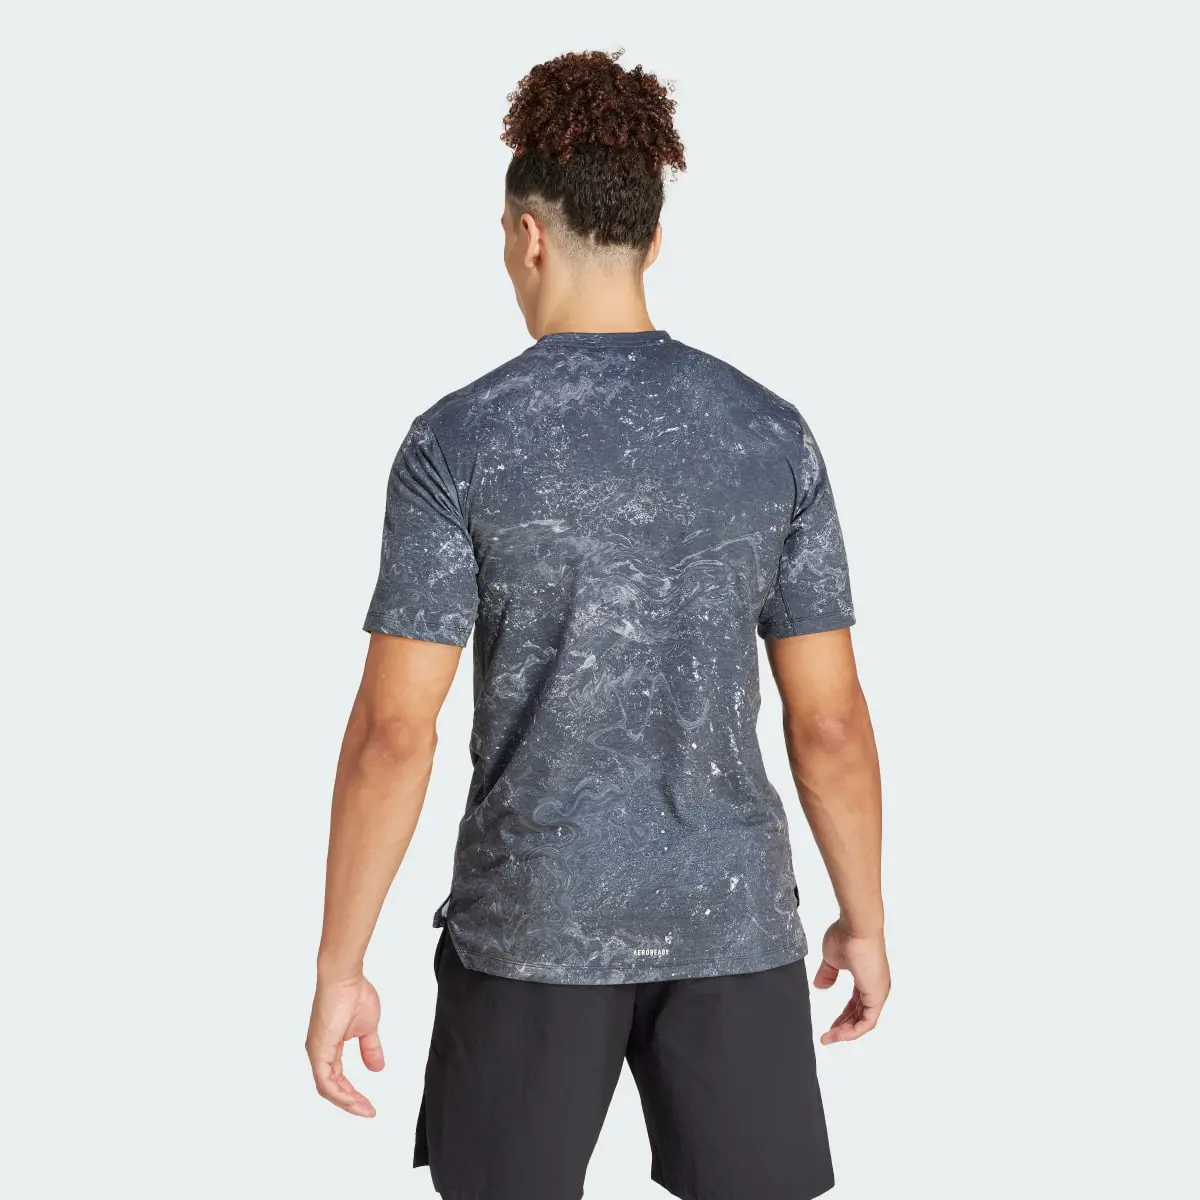 Adidas Power Workout T-Shirt. 3